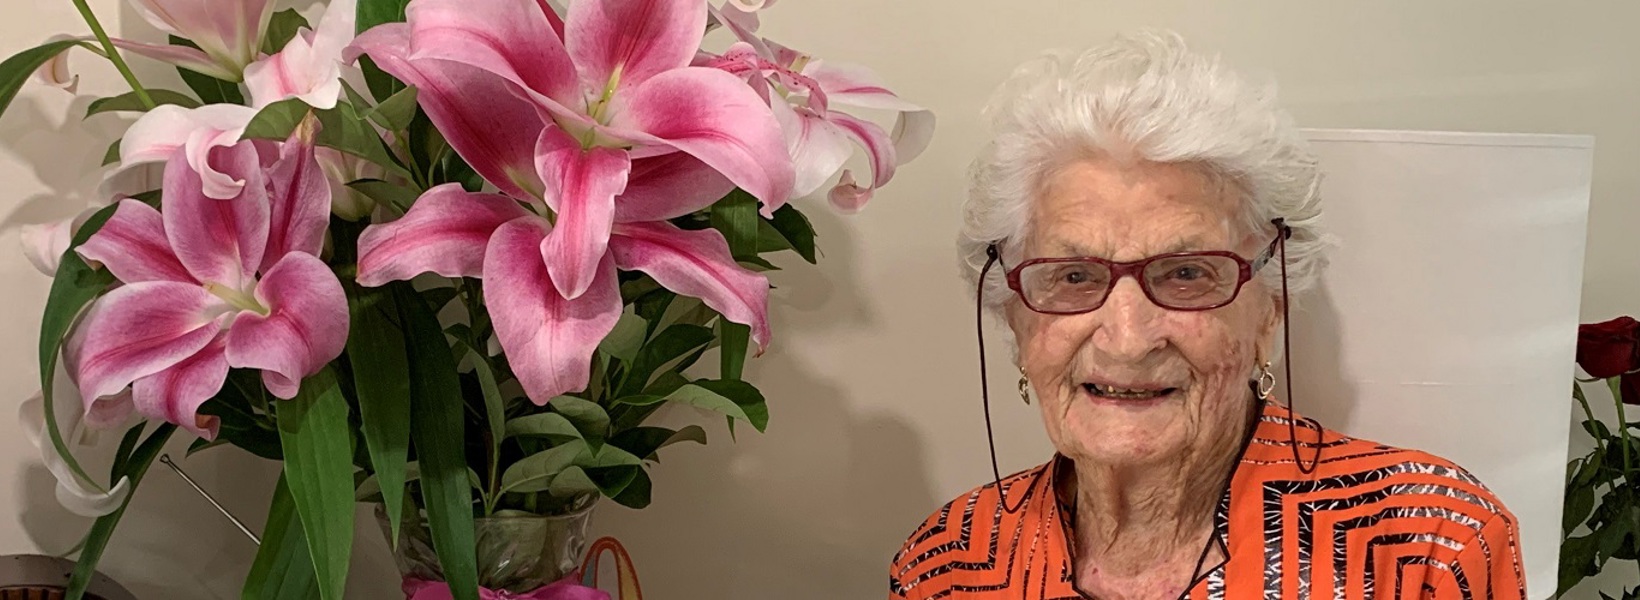 Betty celebrates 100 years